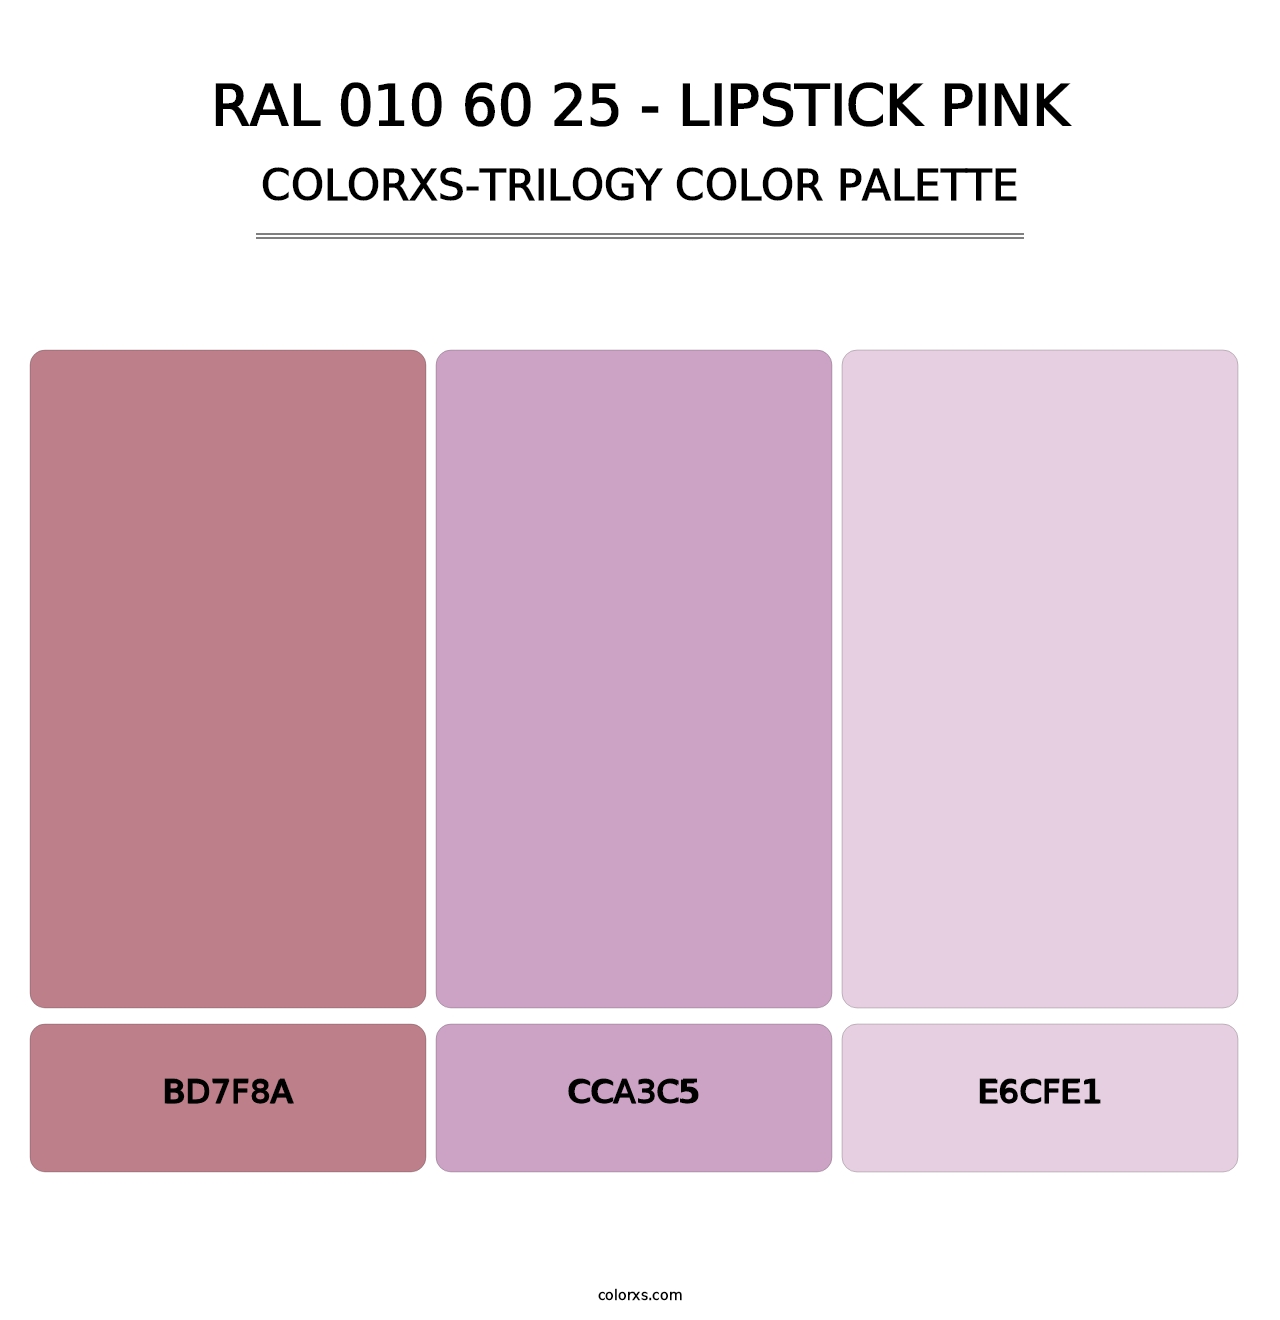 RAL 010 60 25 - Lipstick Pink - Colorxs Trilogy Palette